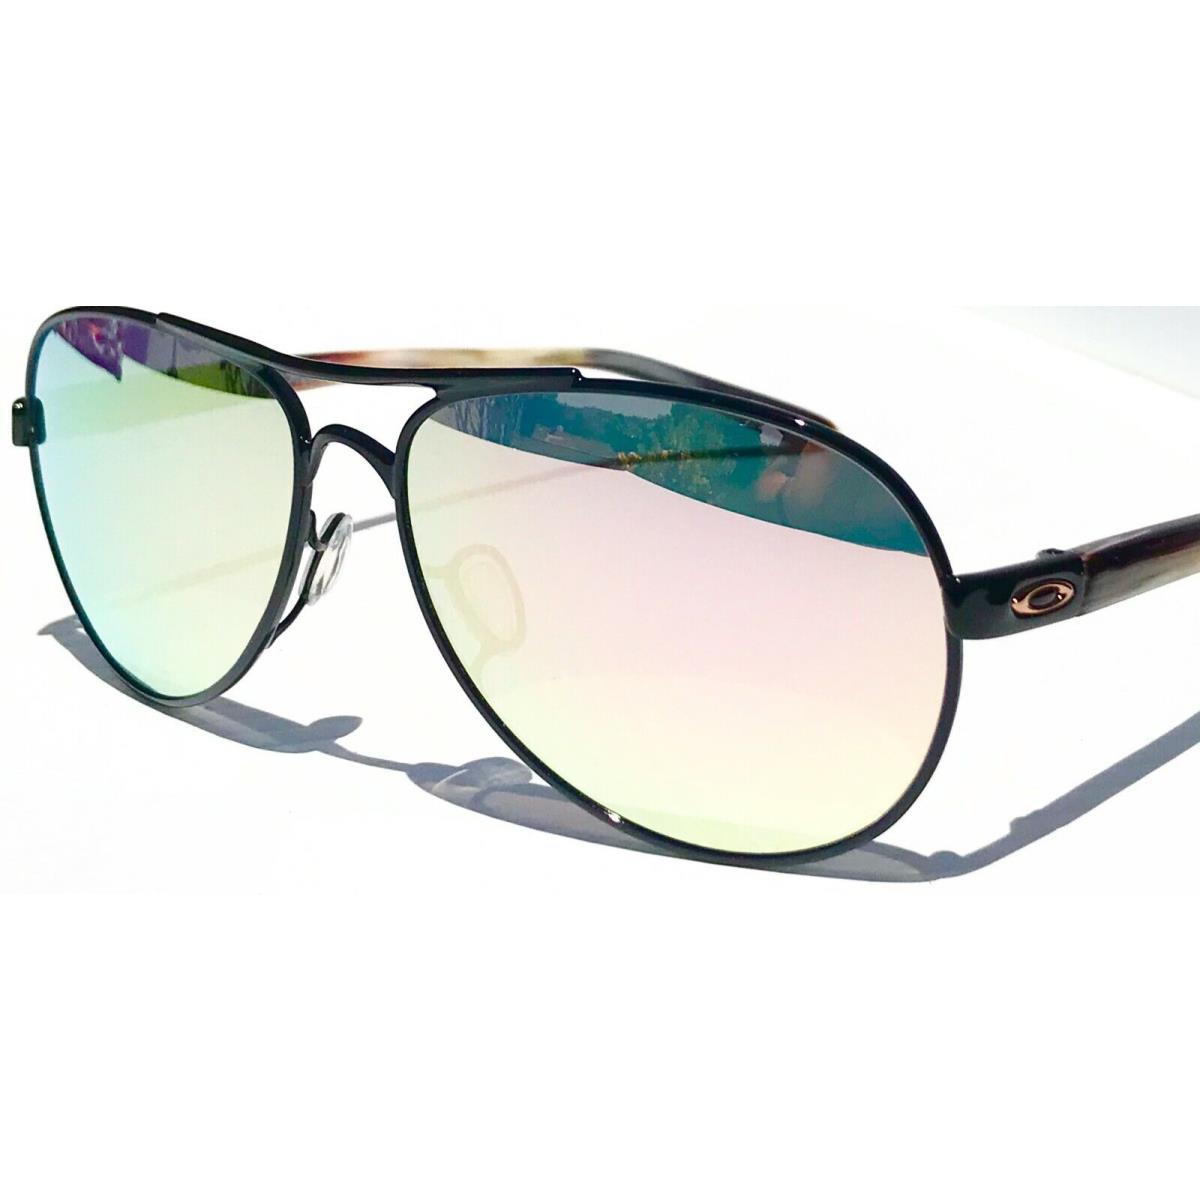 Oakley sunglasses Tie Breaker - Pink , Multicolor Frame, Pink Lens 2